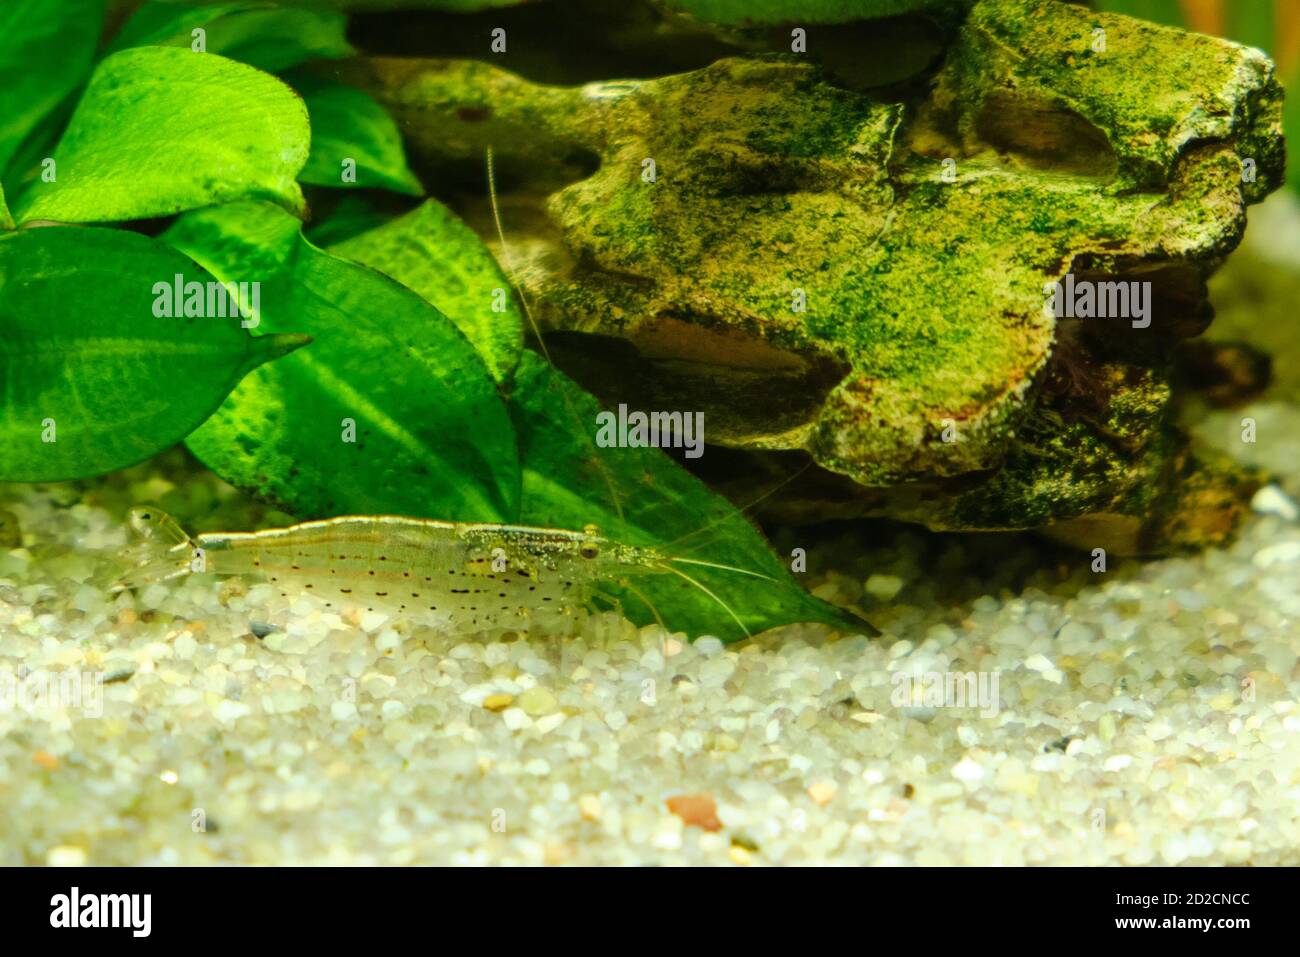 Small yellow shrimp in an aquarium, close-up Stock Photo